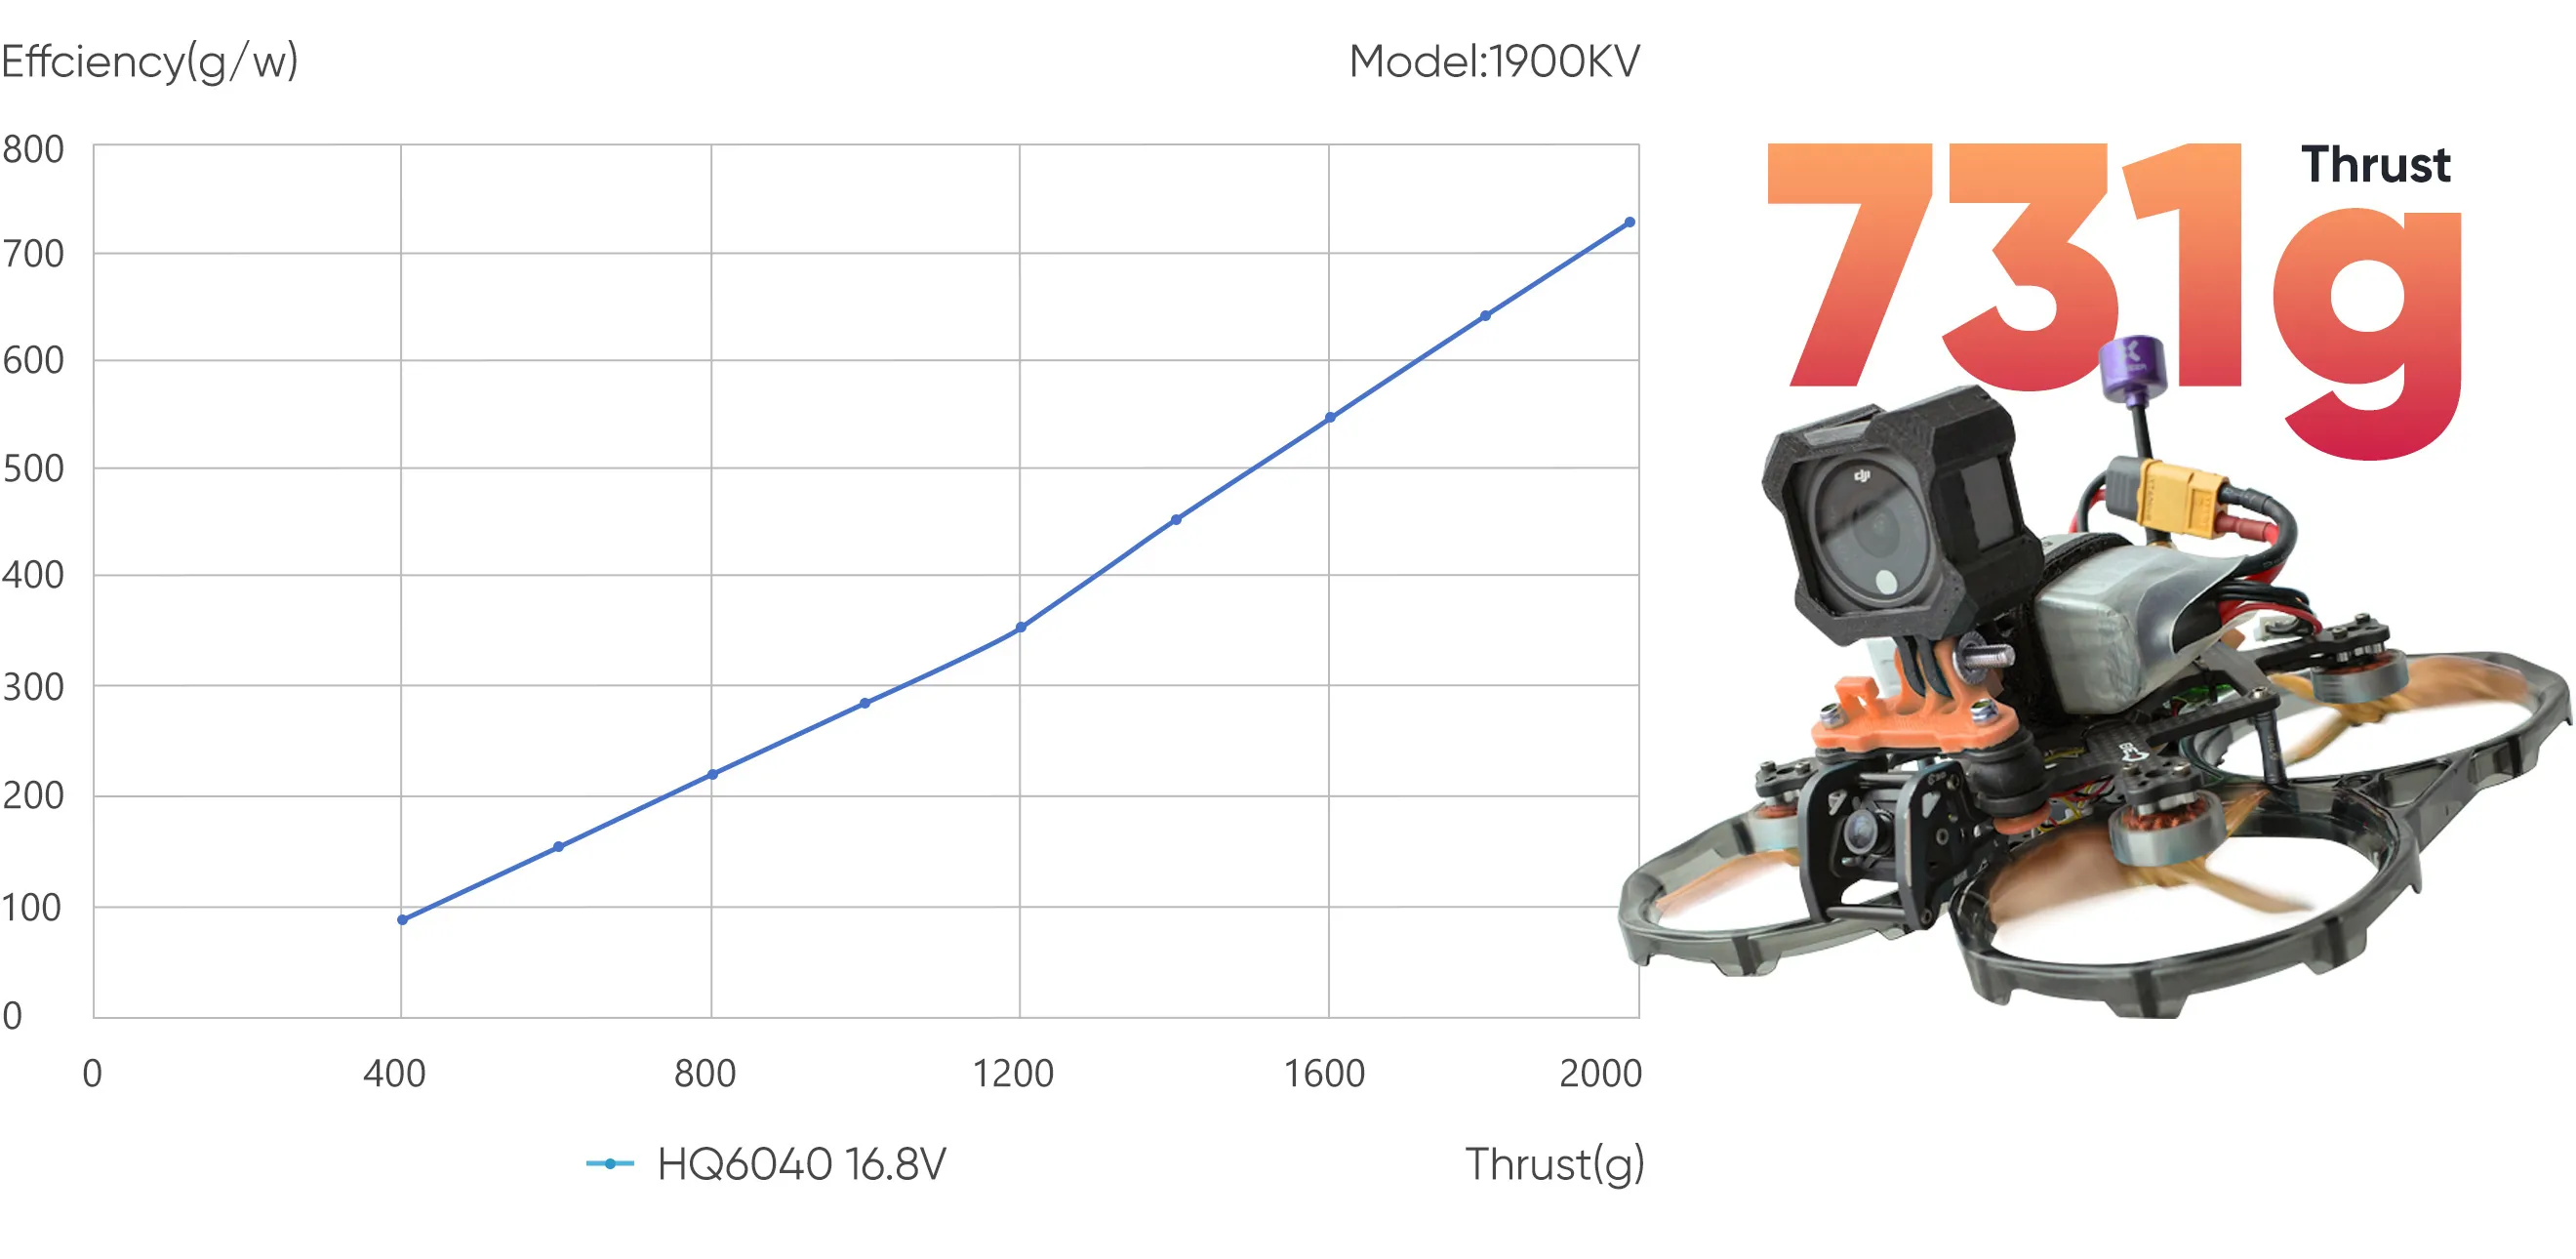 1804 FPV motor with high thrust